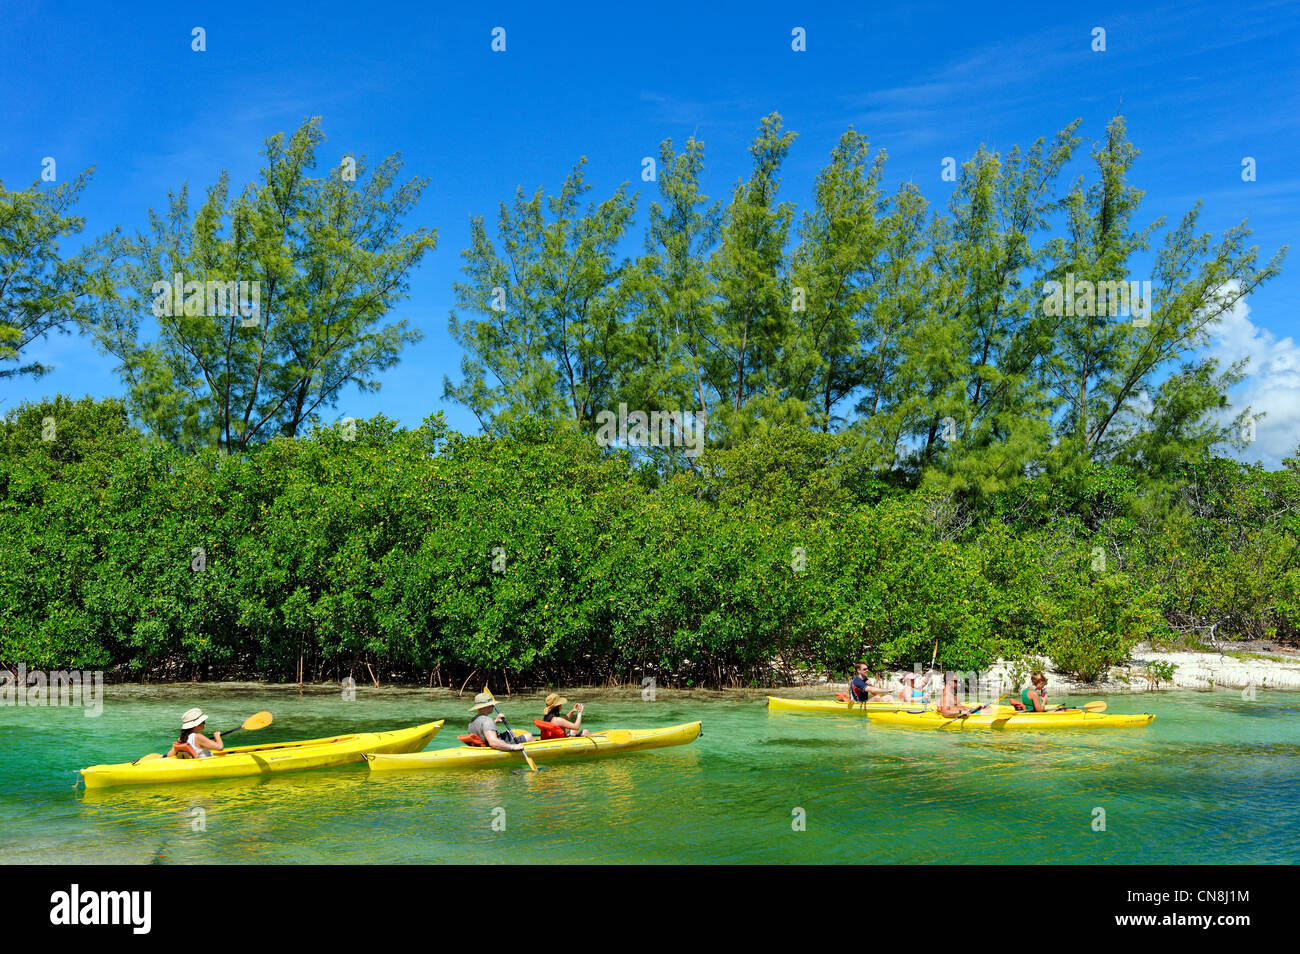 Bahamas, Grand Bahama Island, alte Freetown, Lucayan Nationalpark, Kanu-Kajak-Thread in den Mangroven Gewässern von emerald Stockfoto